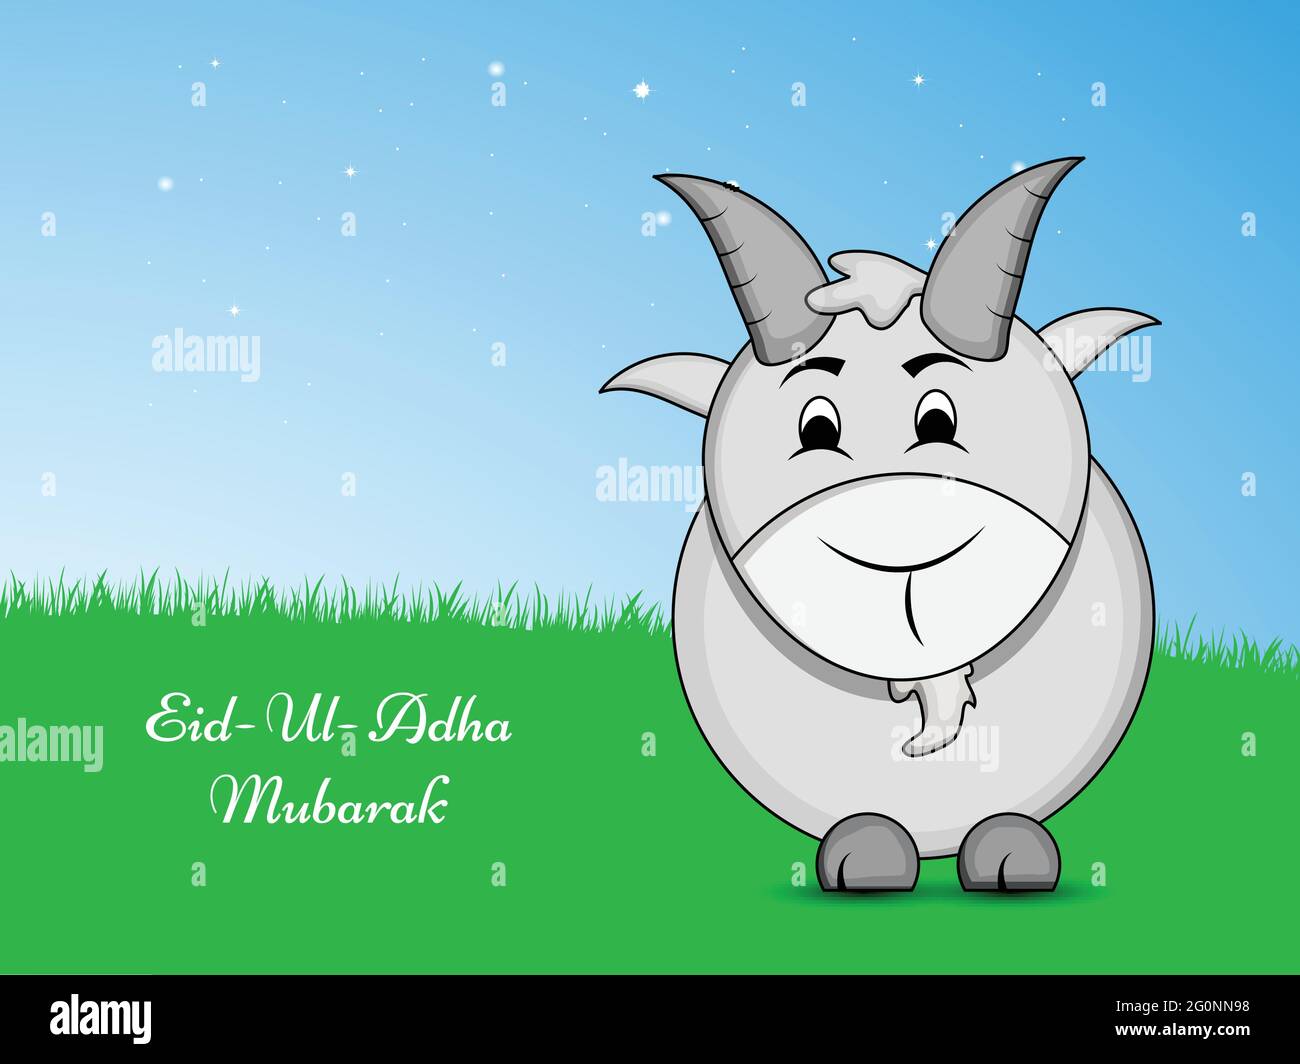 Eid ul adha Mubarak Stock Vector Image & Art - Alamy